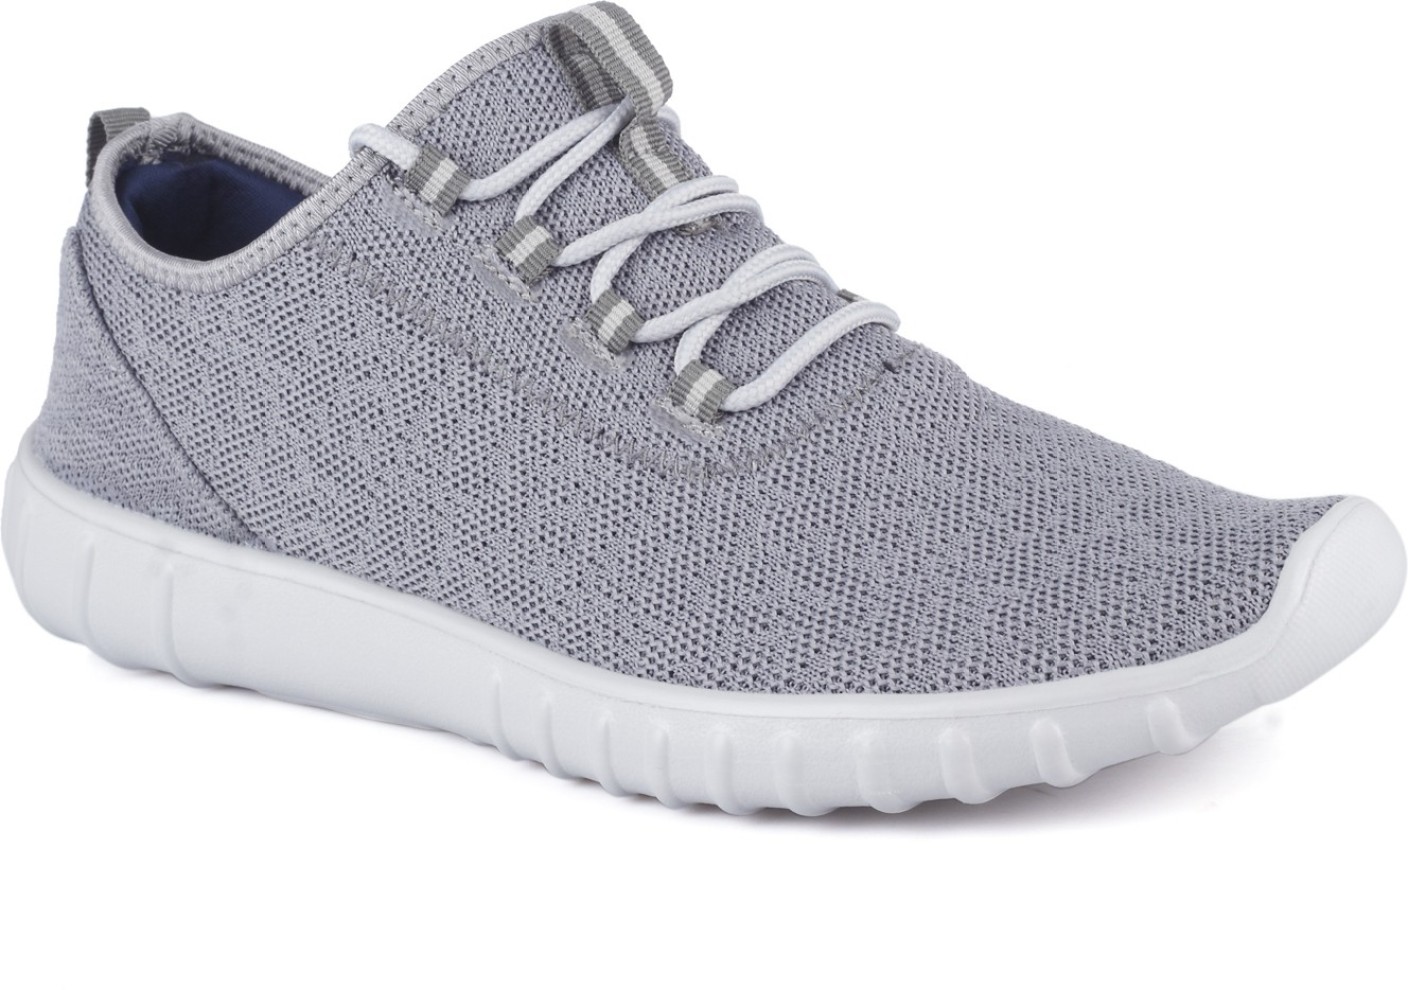 Mufti Mufti Grey Sneakers Sneakers For Men - Buy Mufti Mufti Grey ...